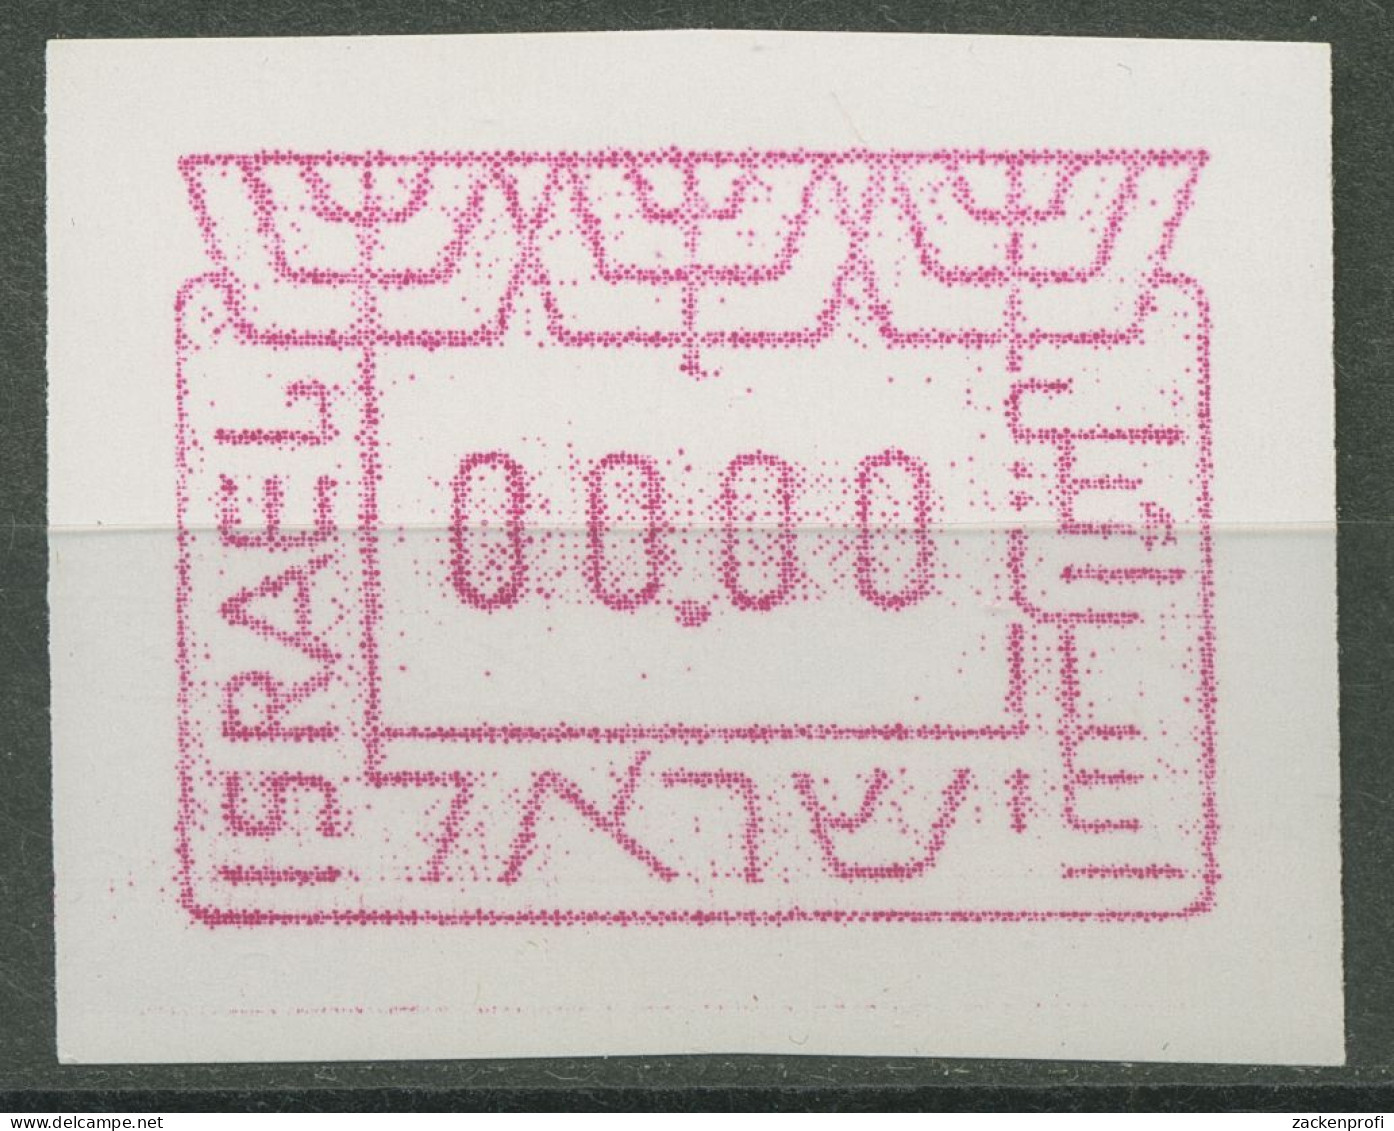 Israel ATM 1988 Automatenmarken 0000-Druck, ATM 1 D I Postfrisch - Vignettes D'affranchissement (Frama)